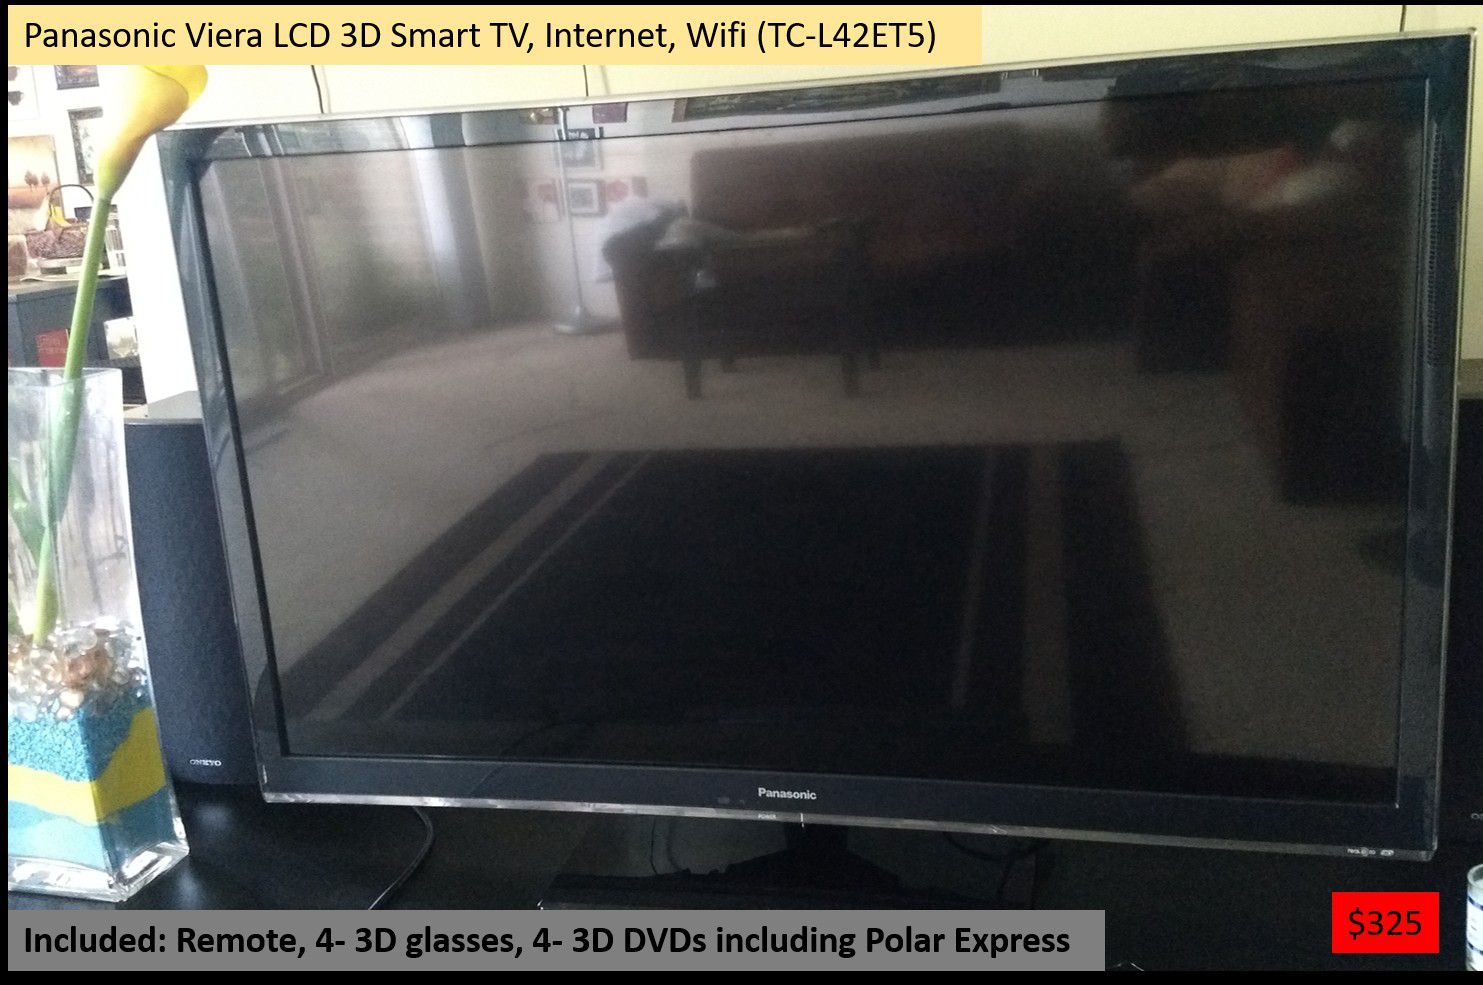 Panasonic Viera 42" LCD 3D smart TV (TC-L42ET5)